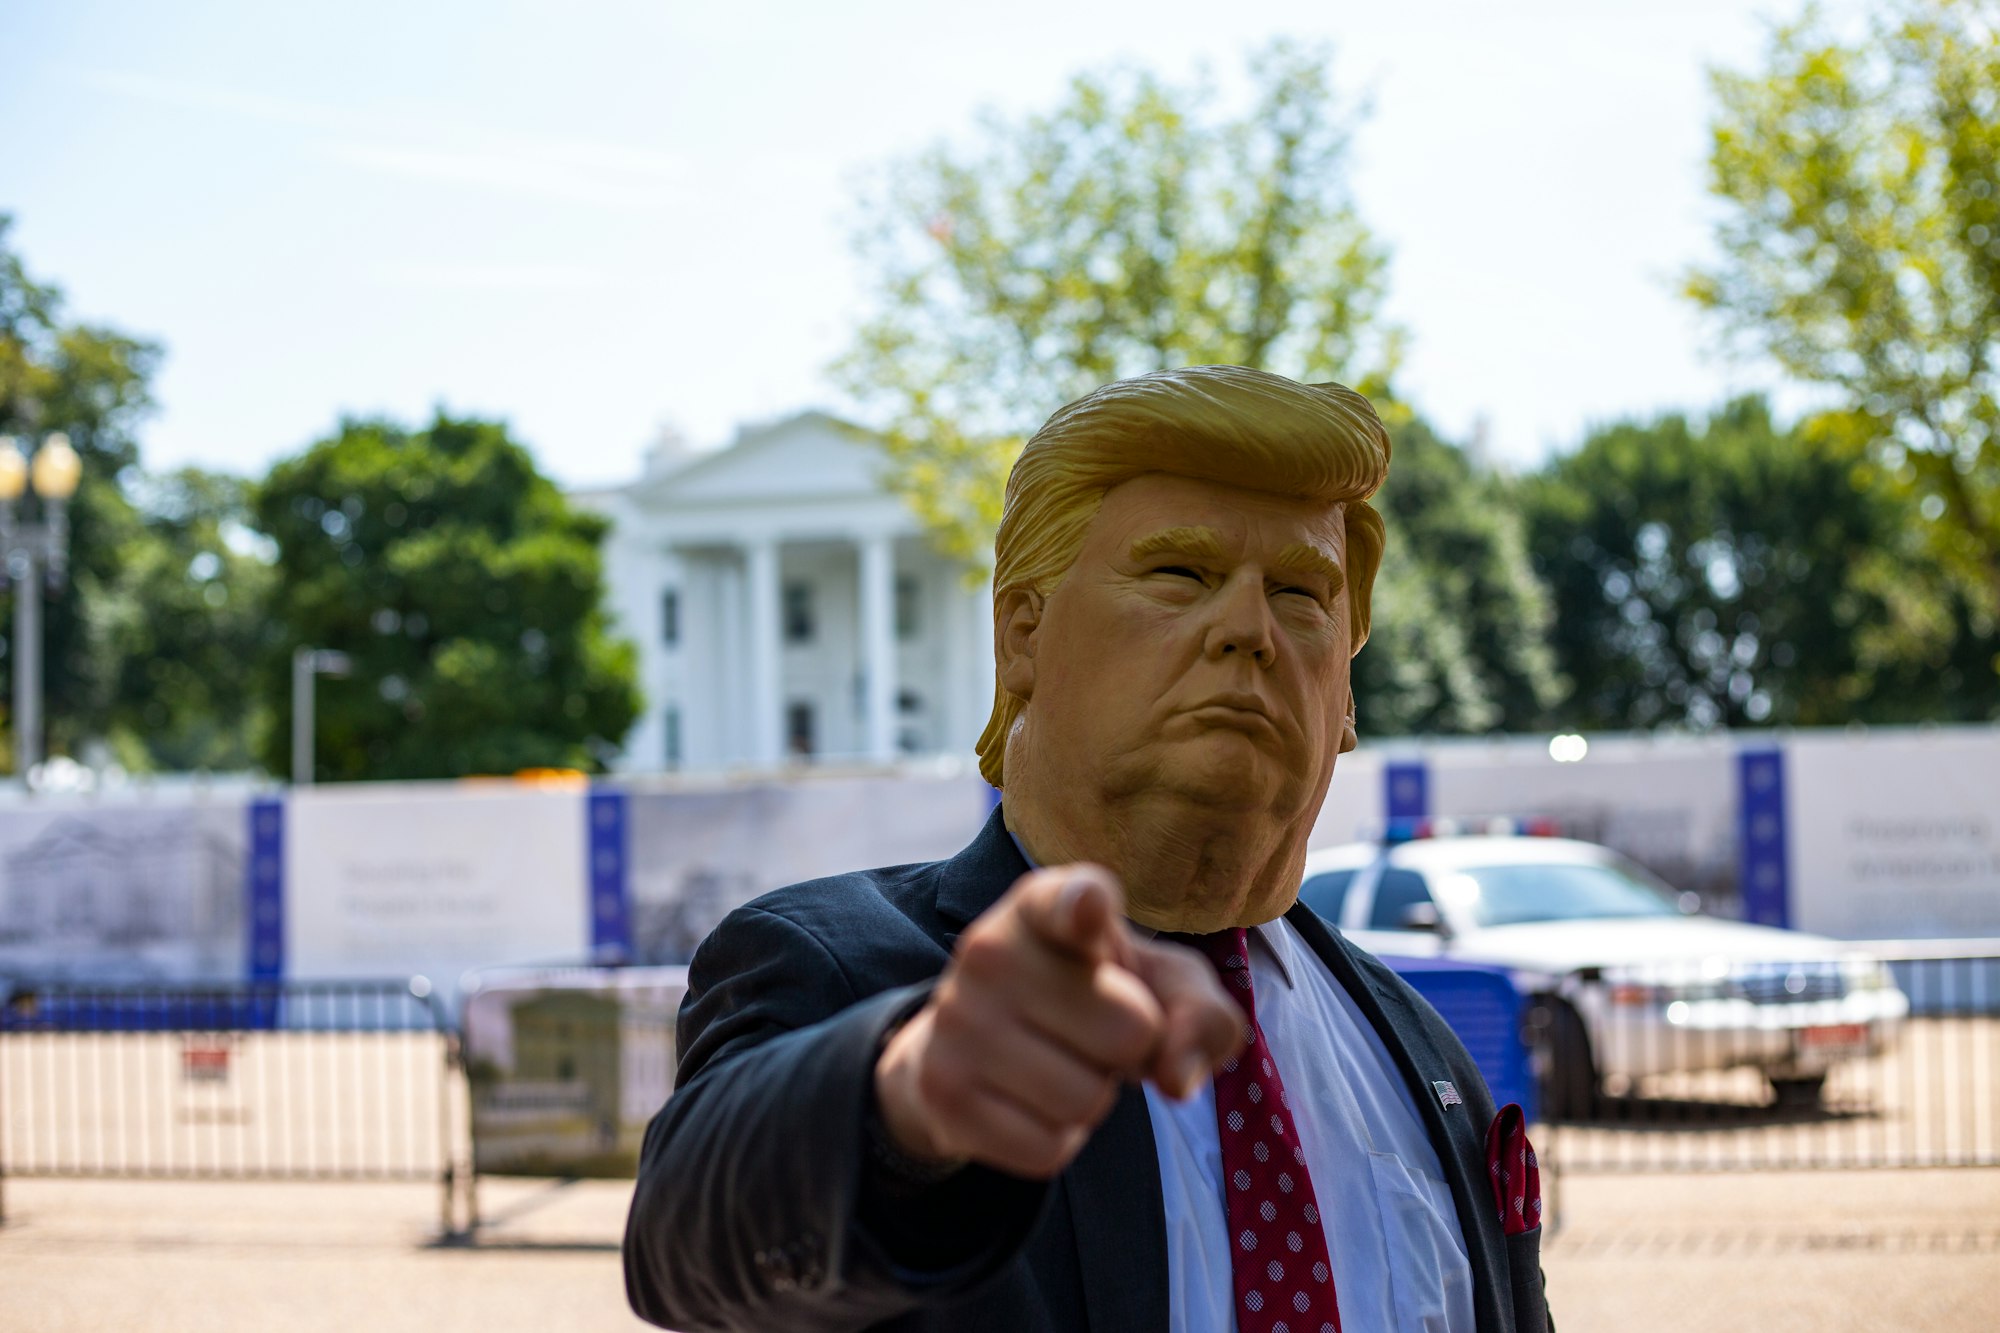 Donald Trump (impersonator) at the White House, Washington DC.